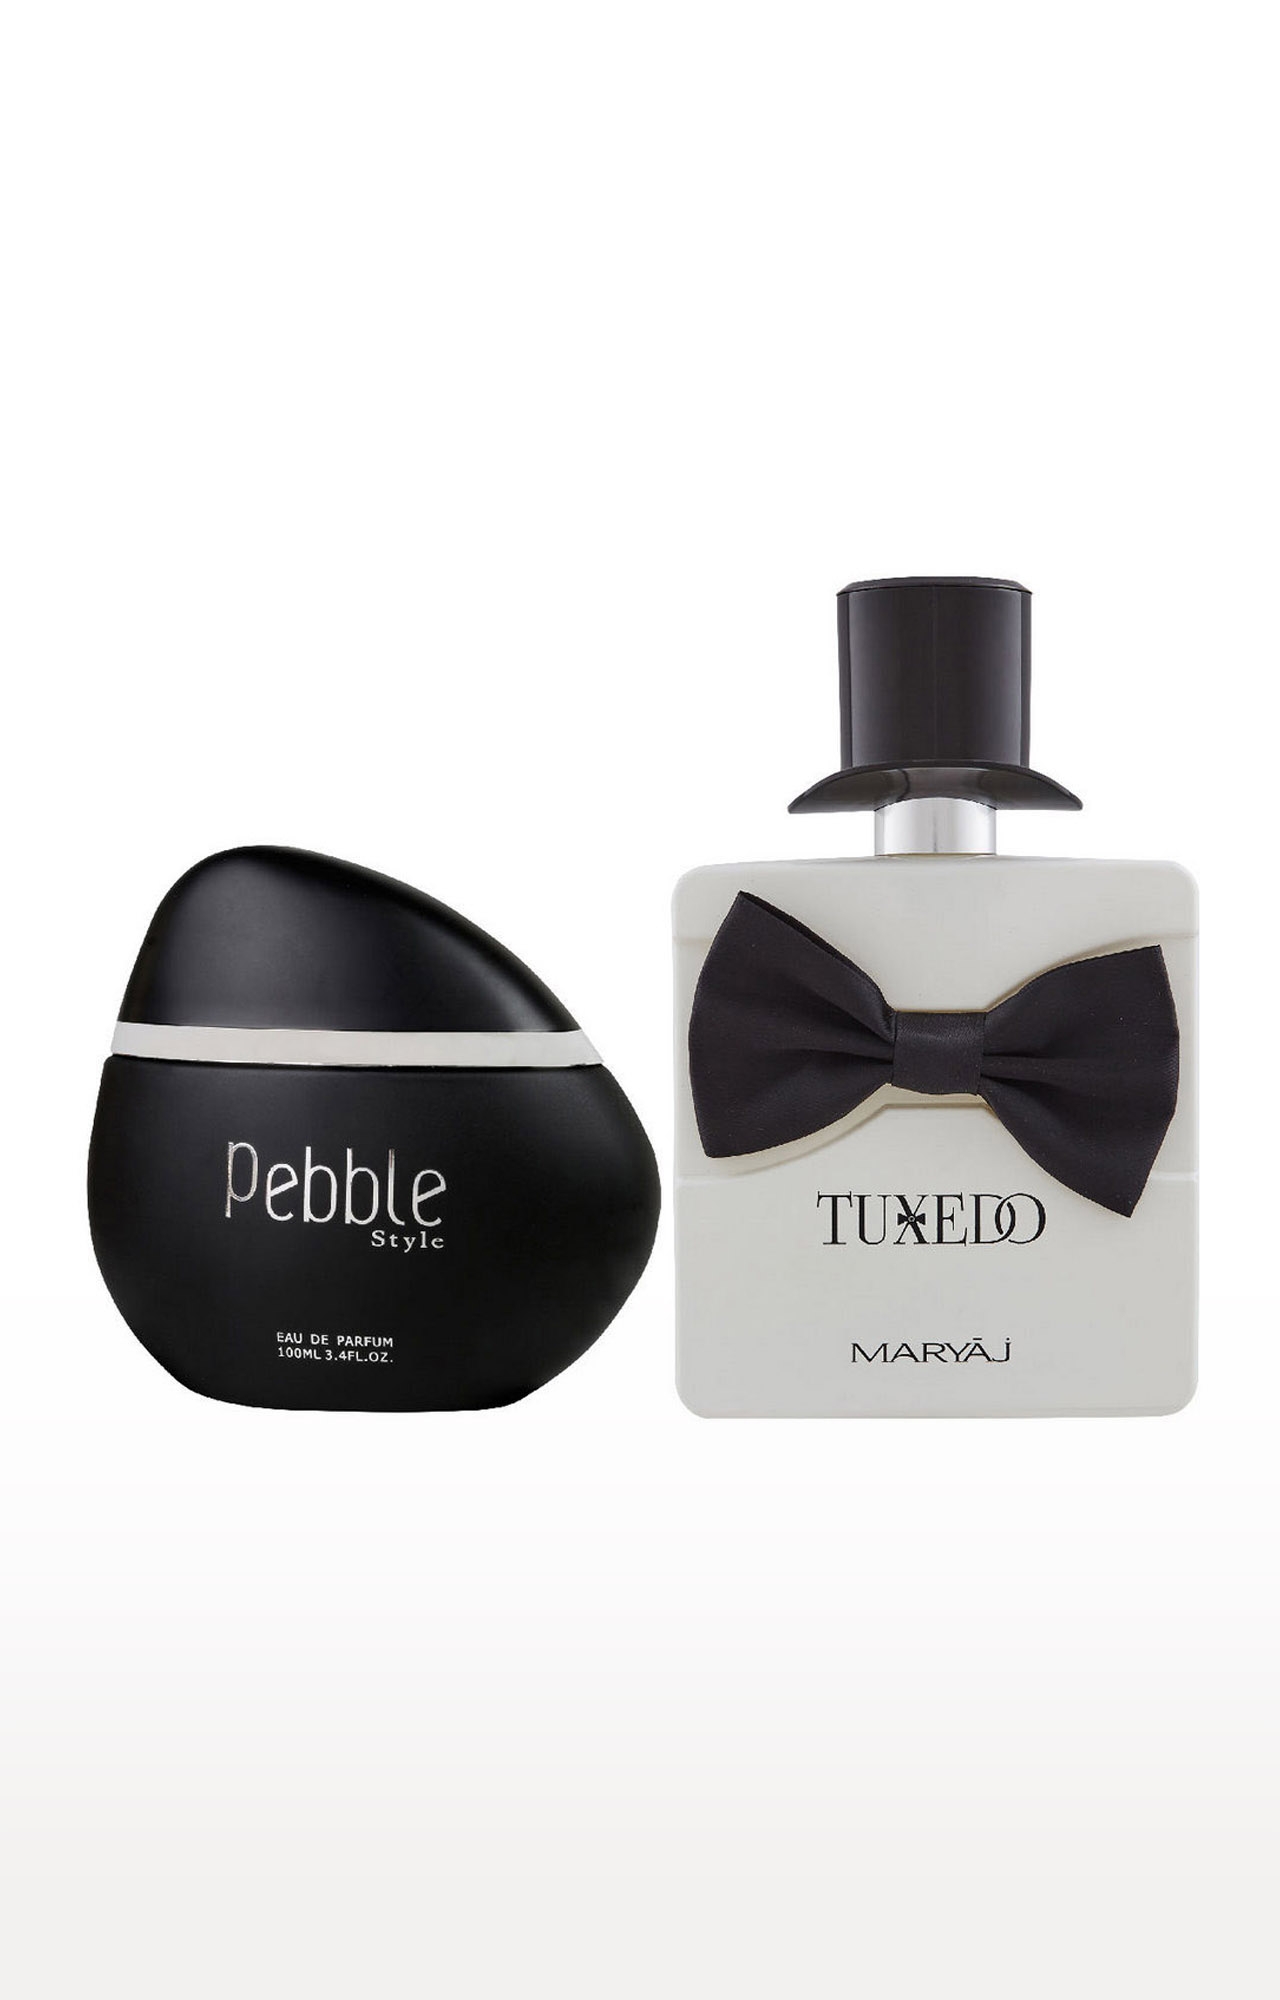 Maryaj Pebble Style Eau De Parfum Perfume 100ml for Men and Maryaj Tuxedo Eau De Parfum Perfume 100ml for Men